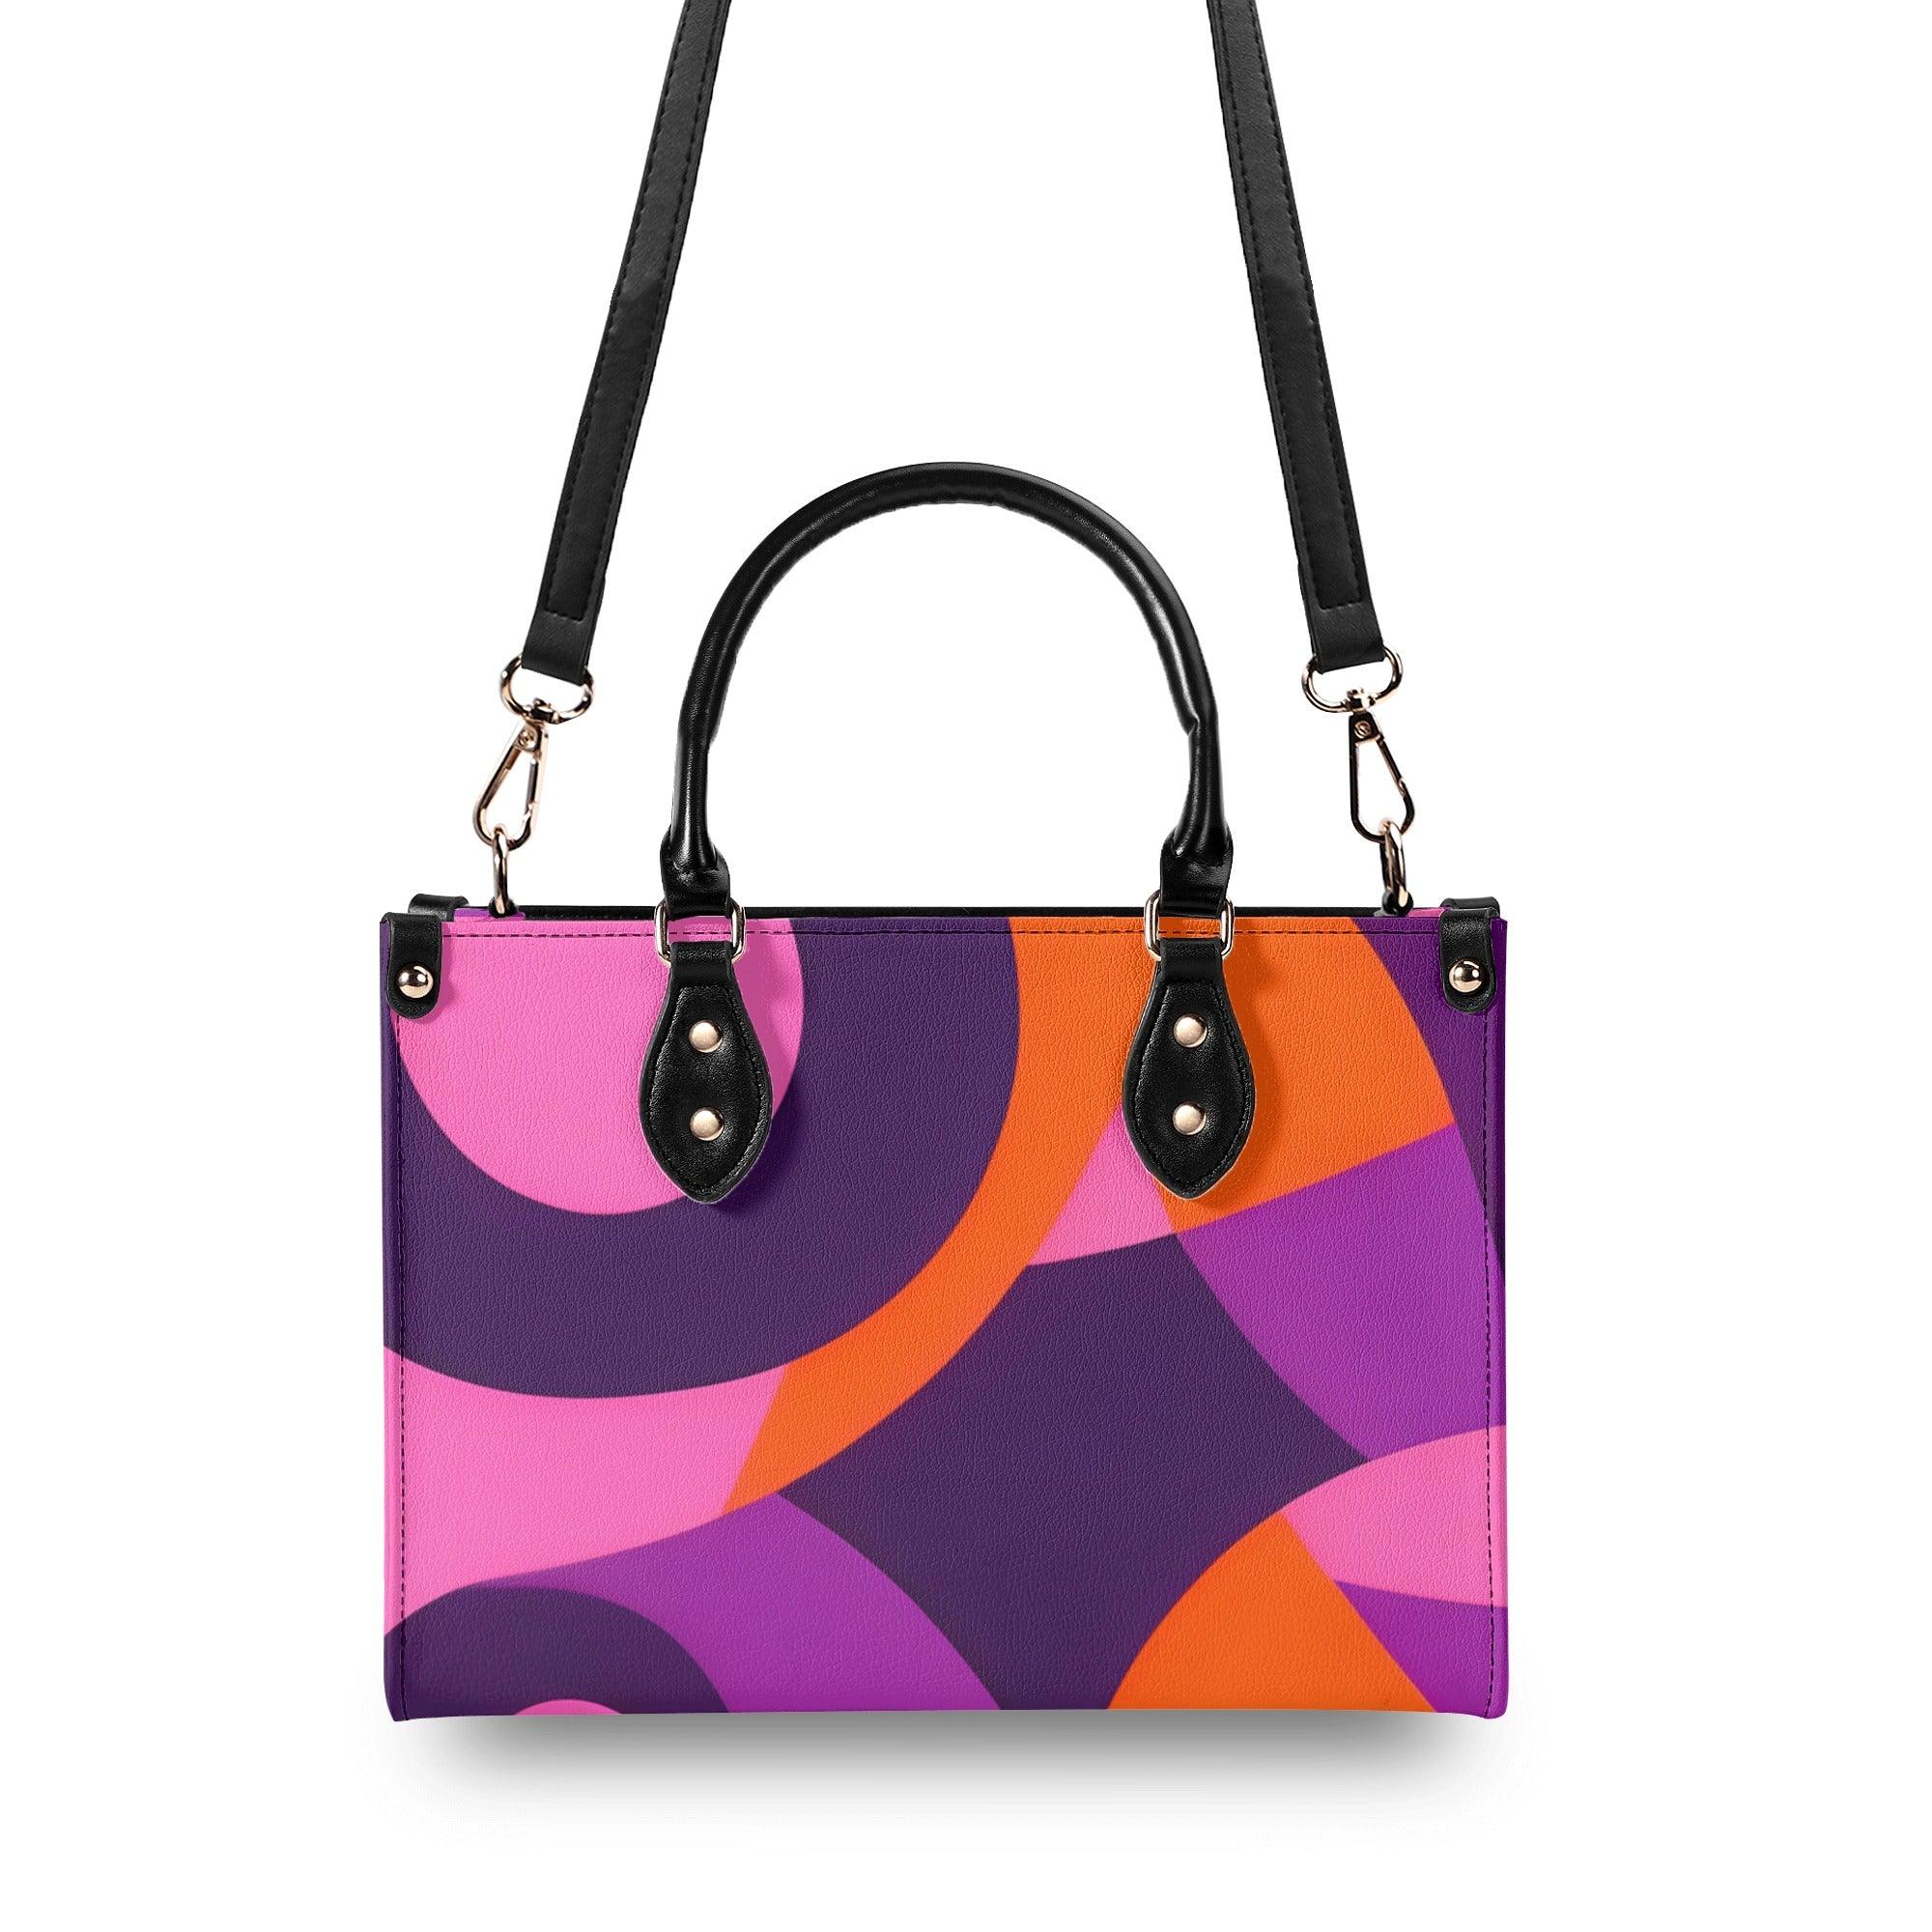 Airline Series 239 Box Satchel - Abstract Geometric Violet Pink Orange Mod Retro Bold Vibrant Funky Black Faux Leather Vegan Handbag Shoulder Bag Blissfully Brand